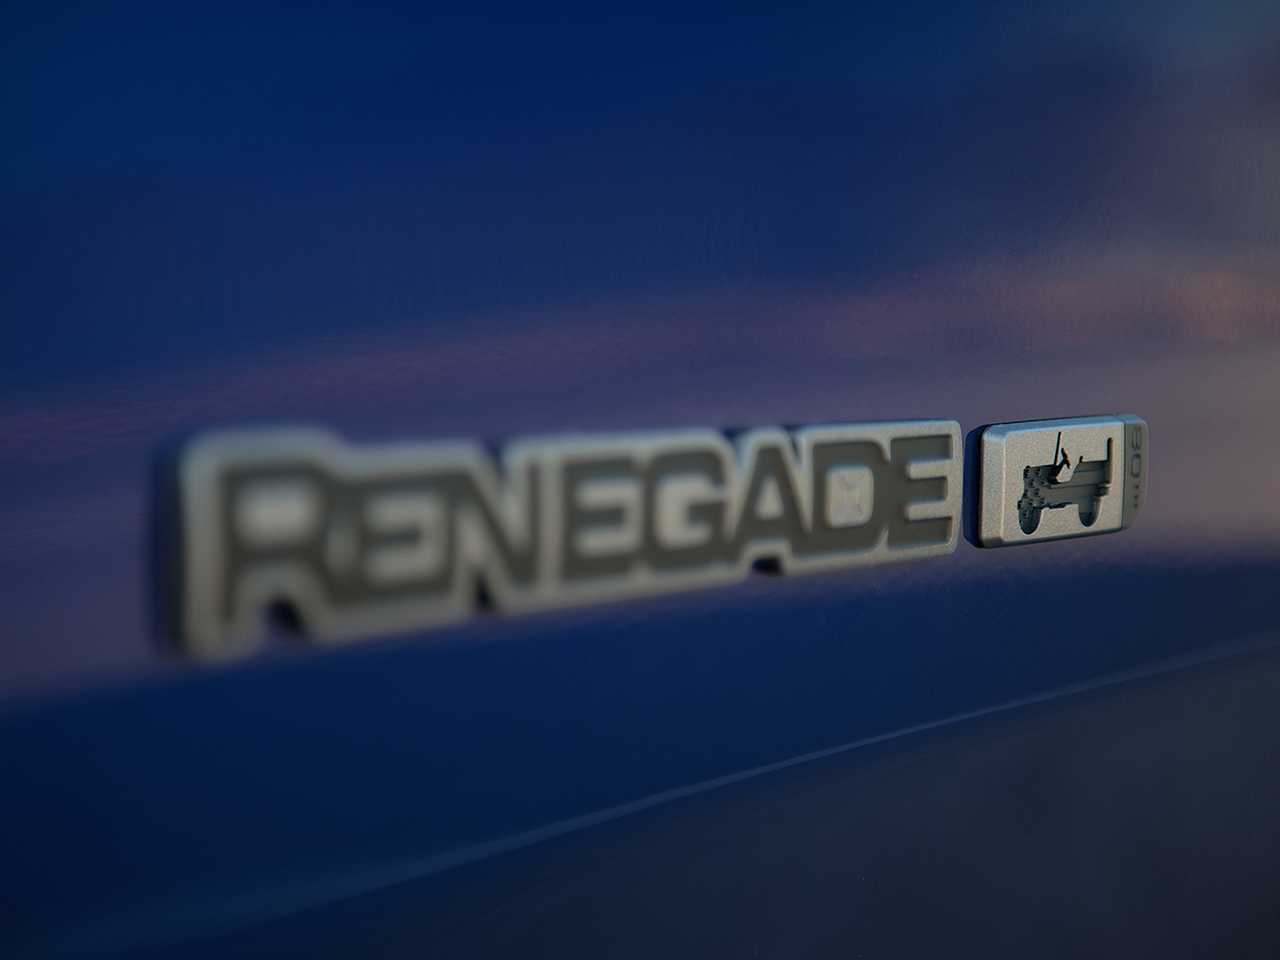 Detalhe do Jeep Renegade 80th Anniversary lanado na Europa